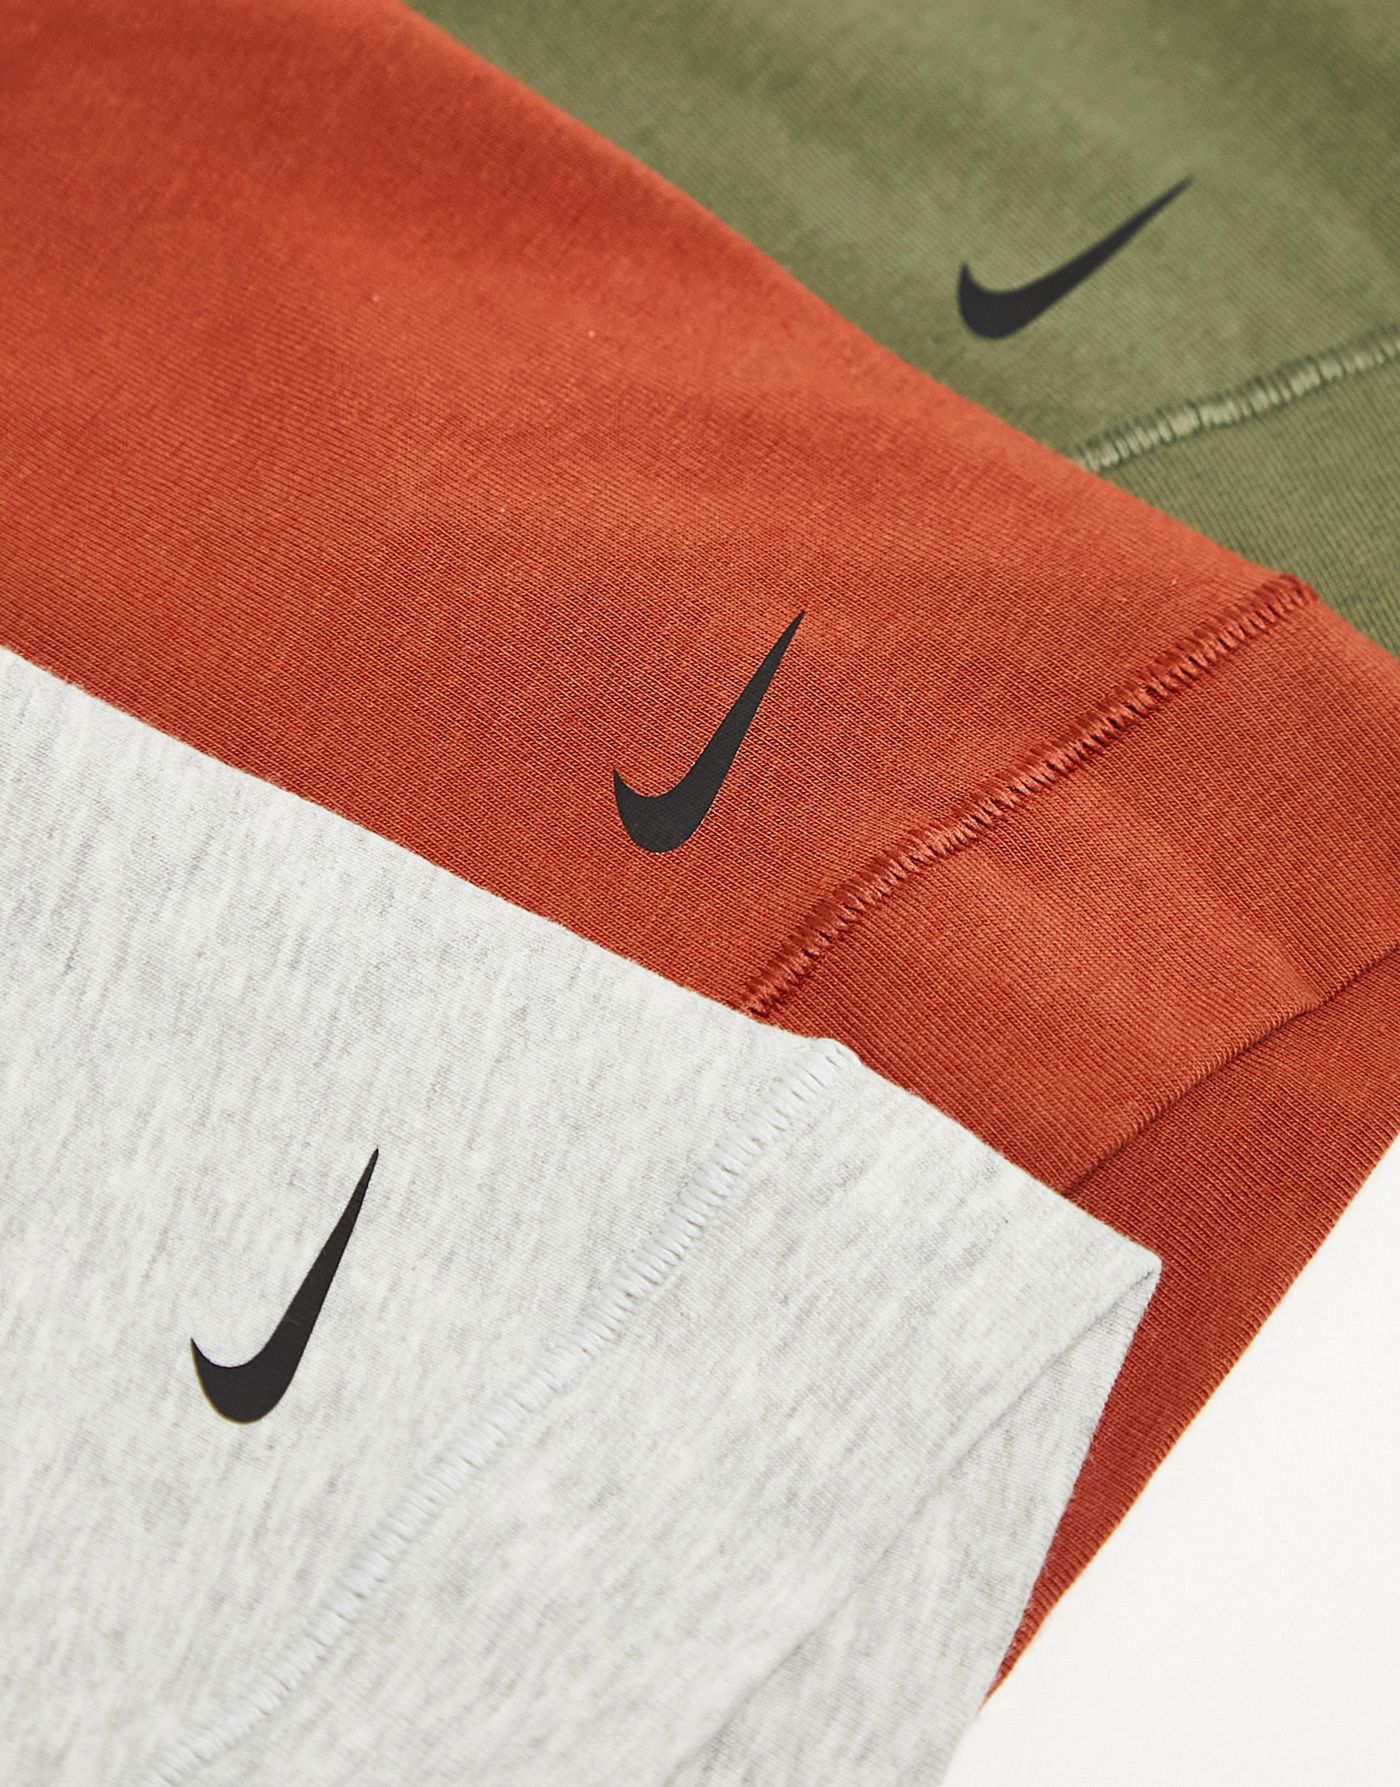 Nike Everyday Cotton Stretch briefs 3 pack in olive/orange/grey 